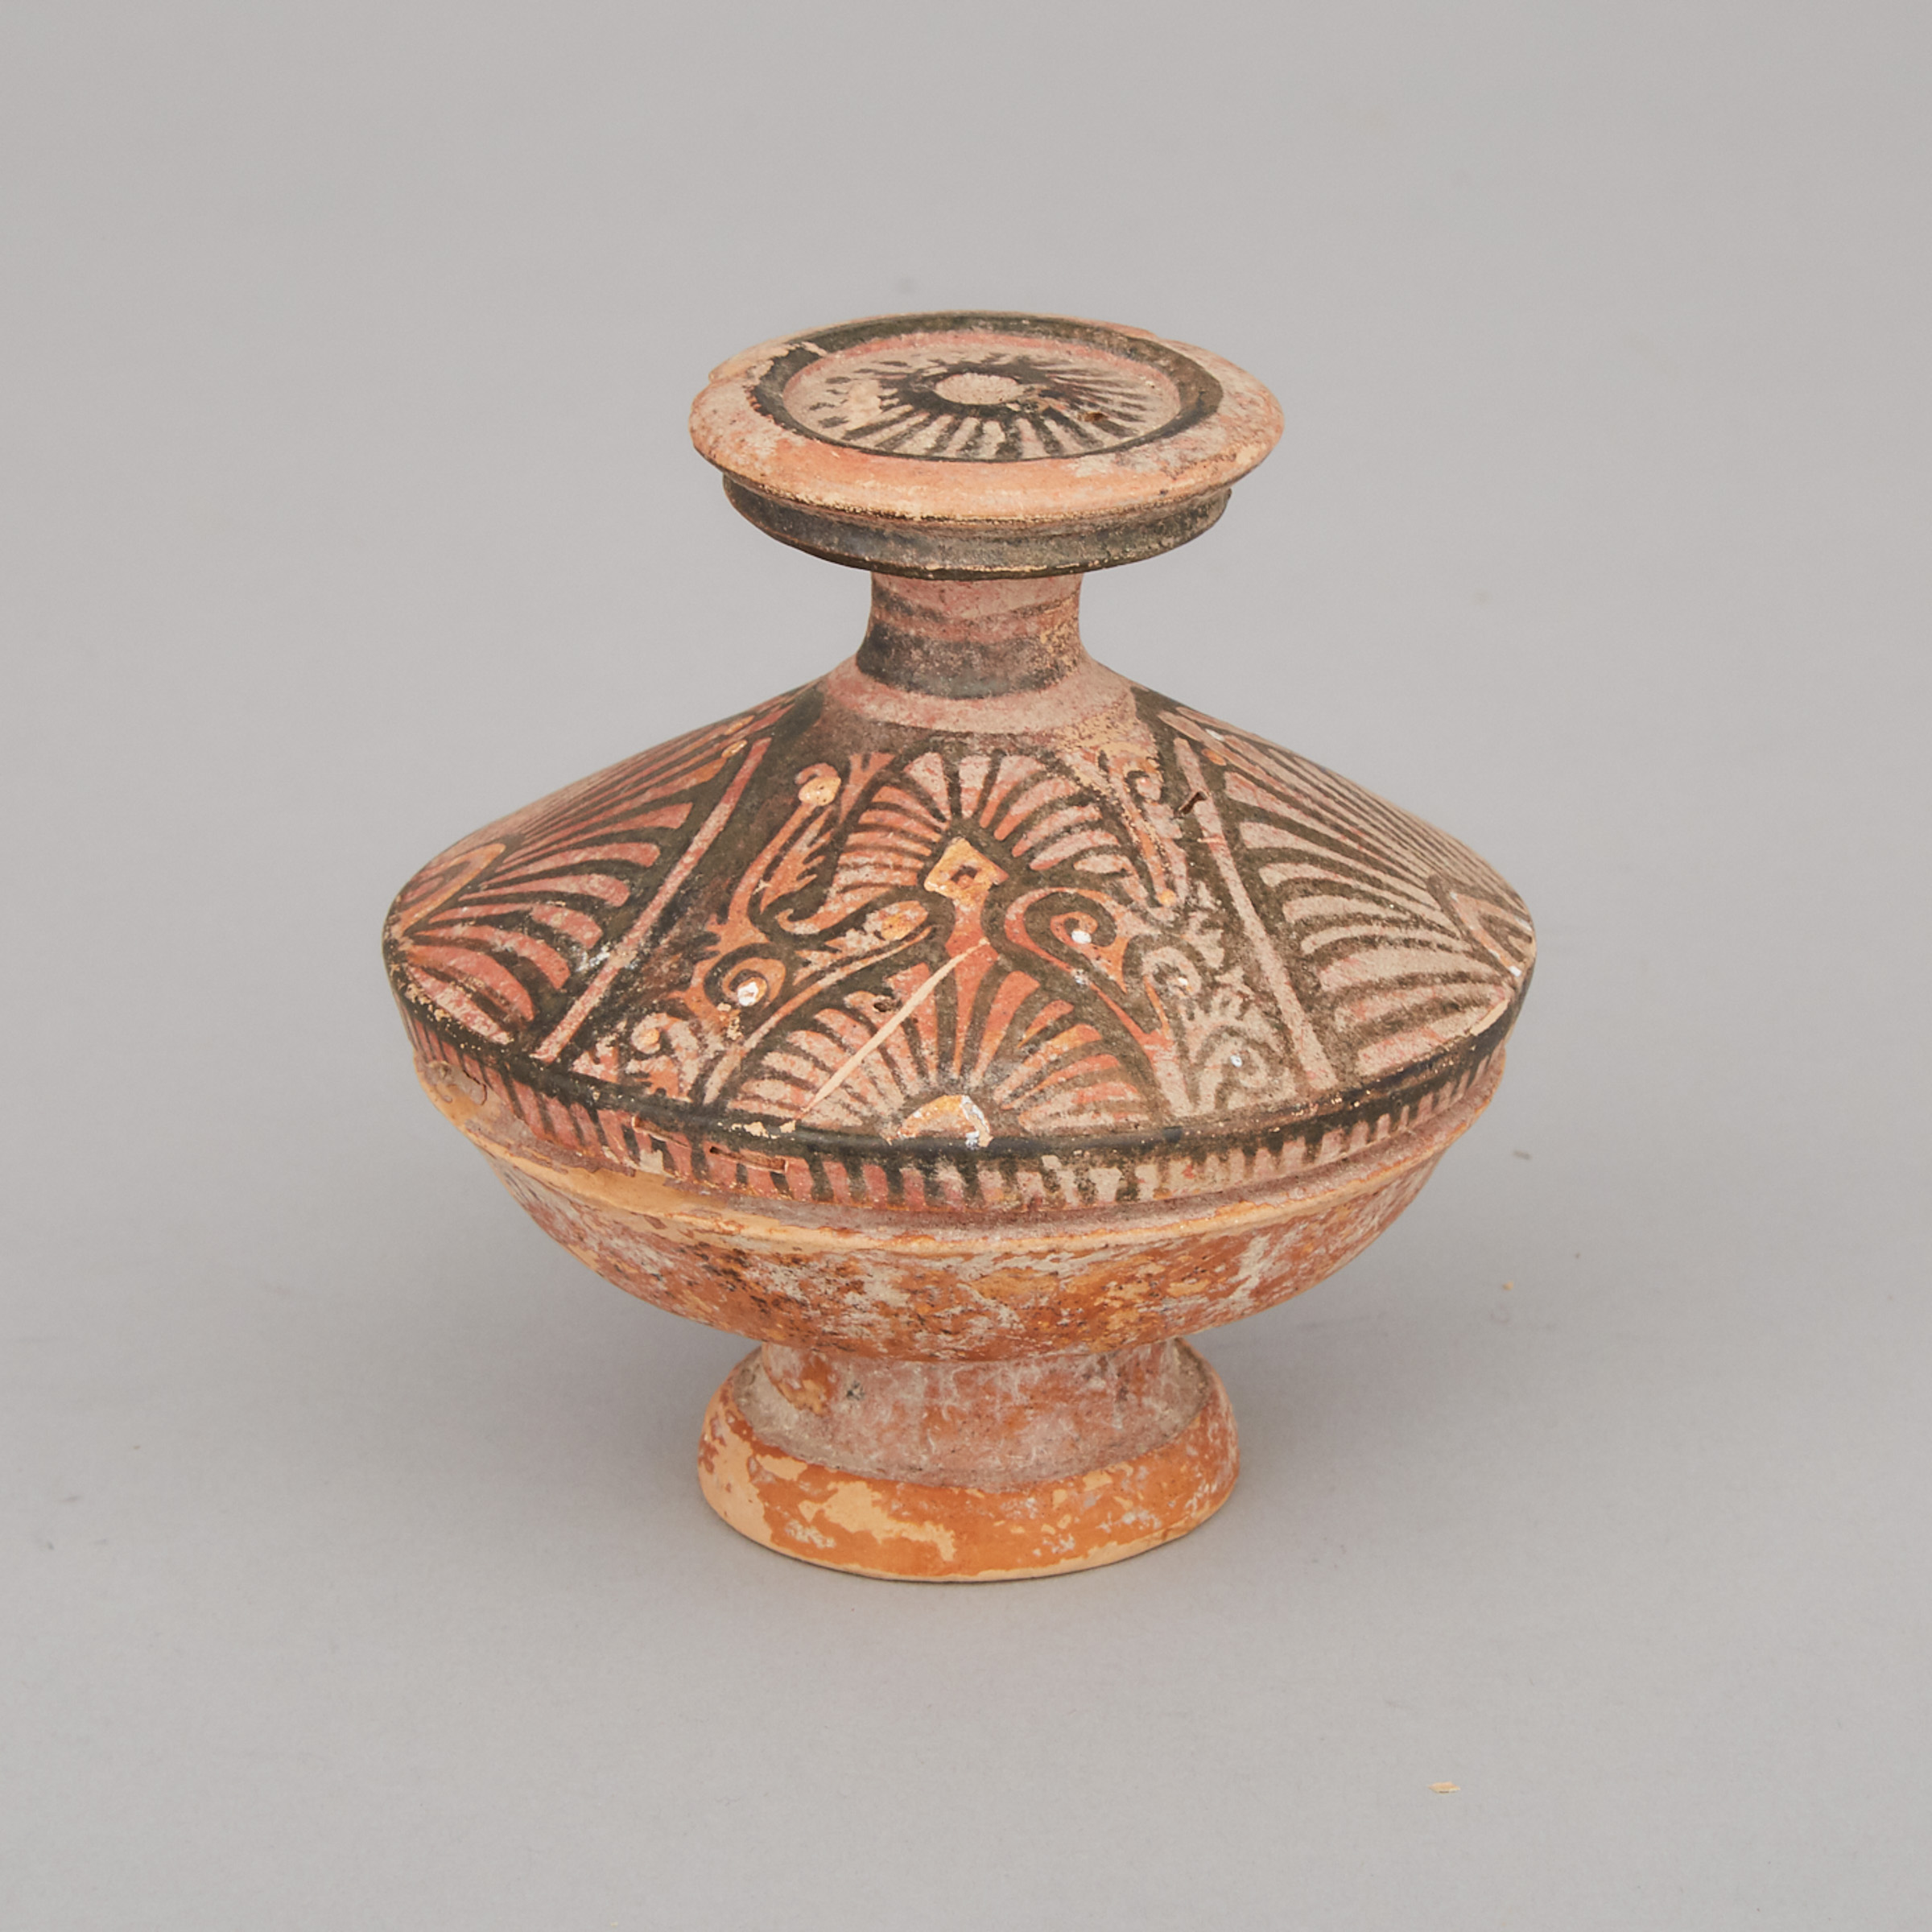 Apulian Red Figure Pottery Lekanis, 4th-3rd century B.C.